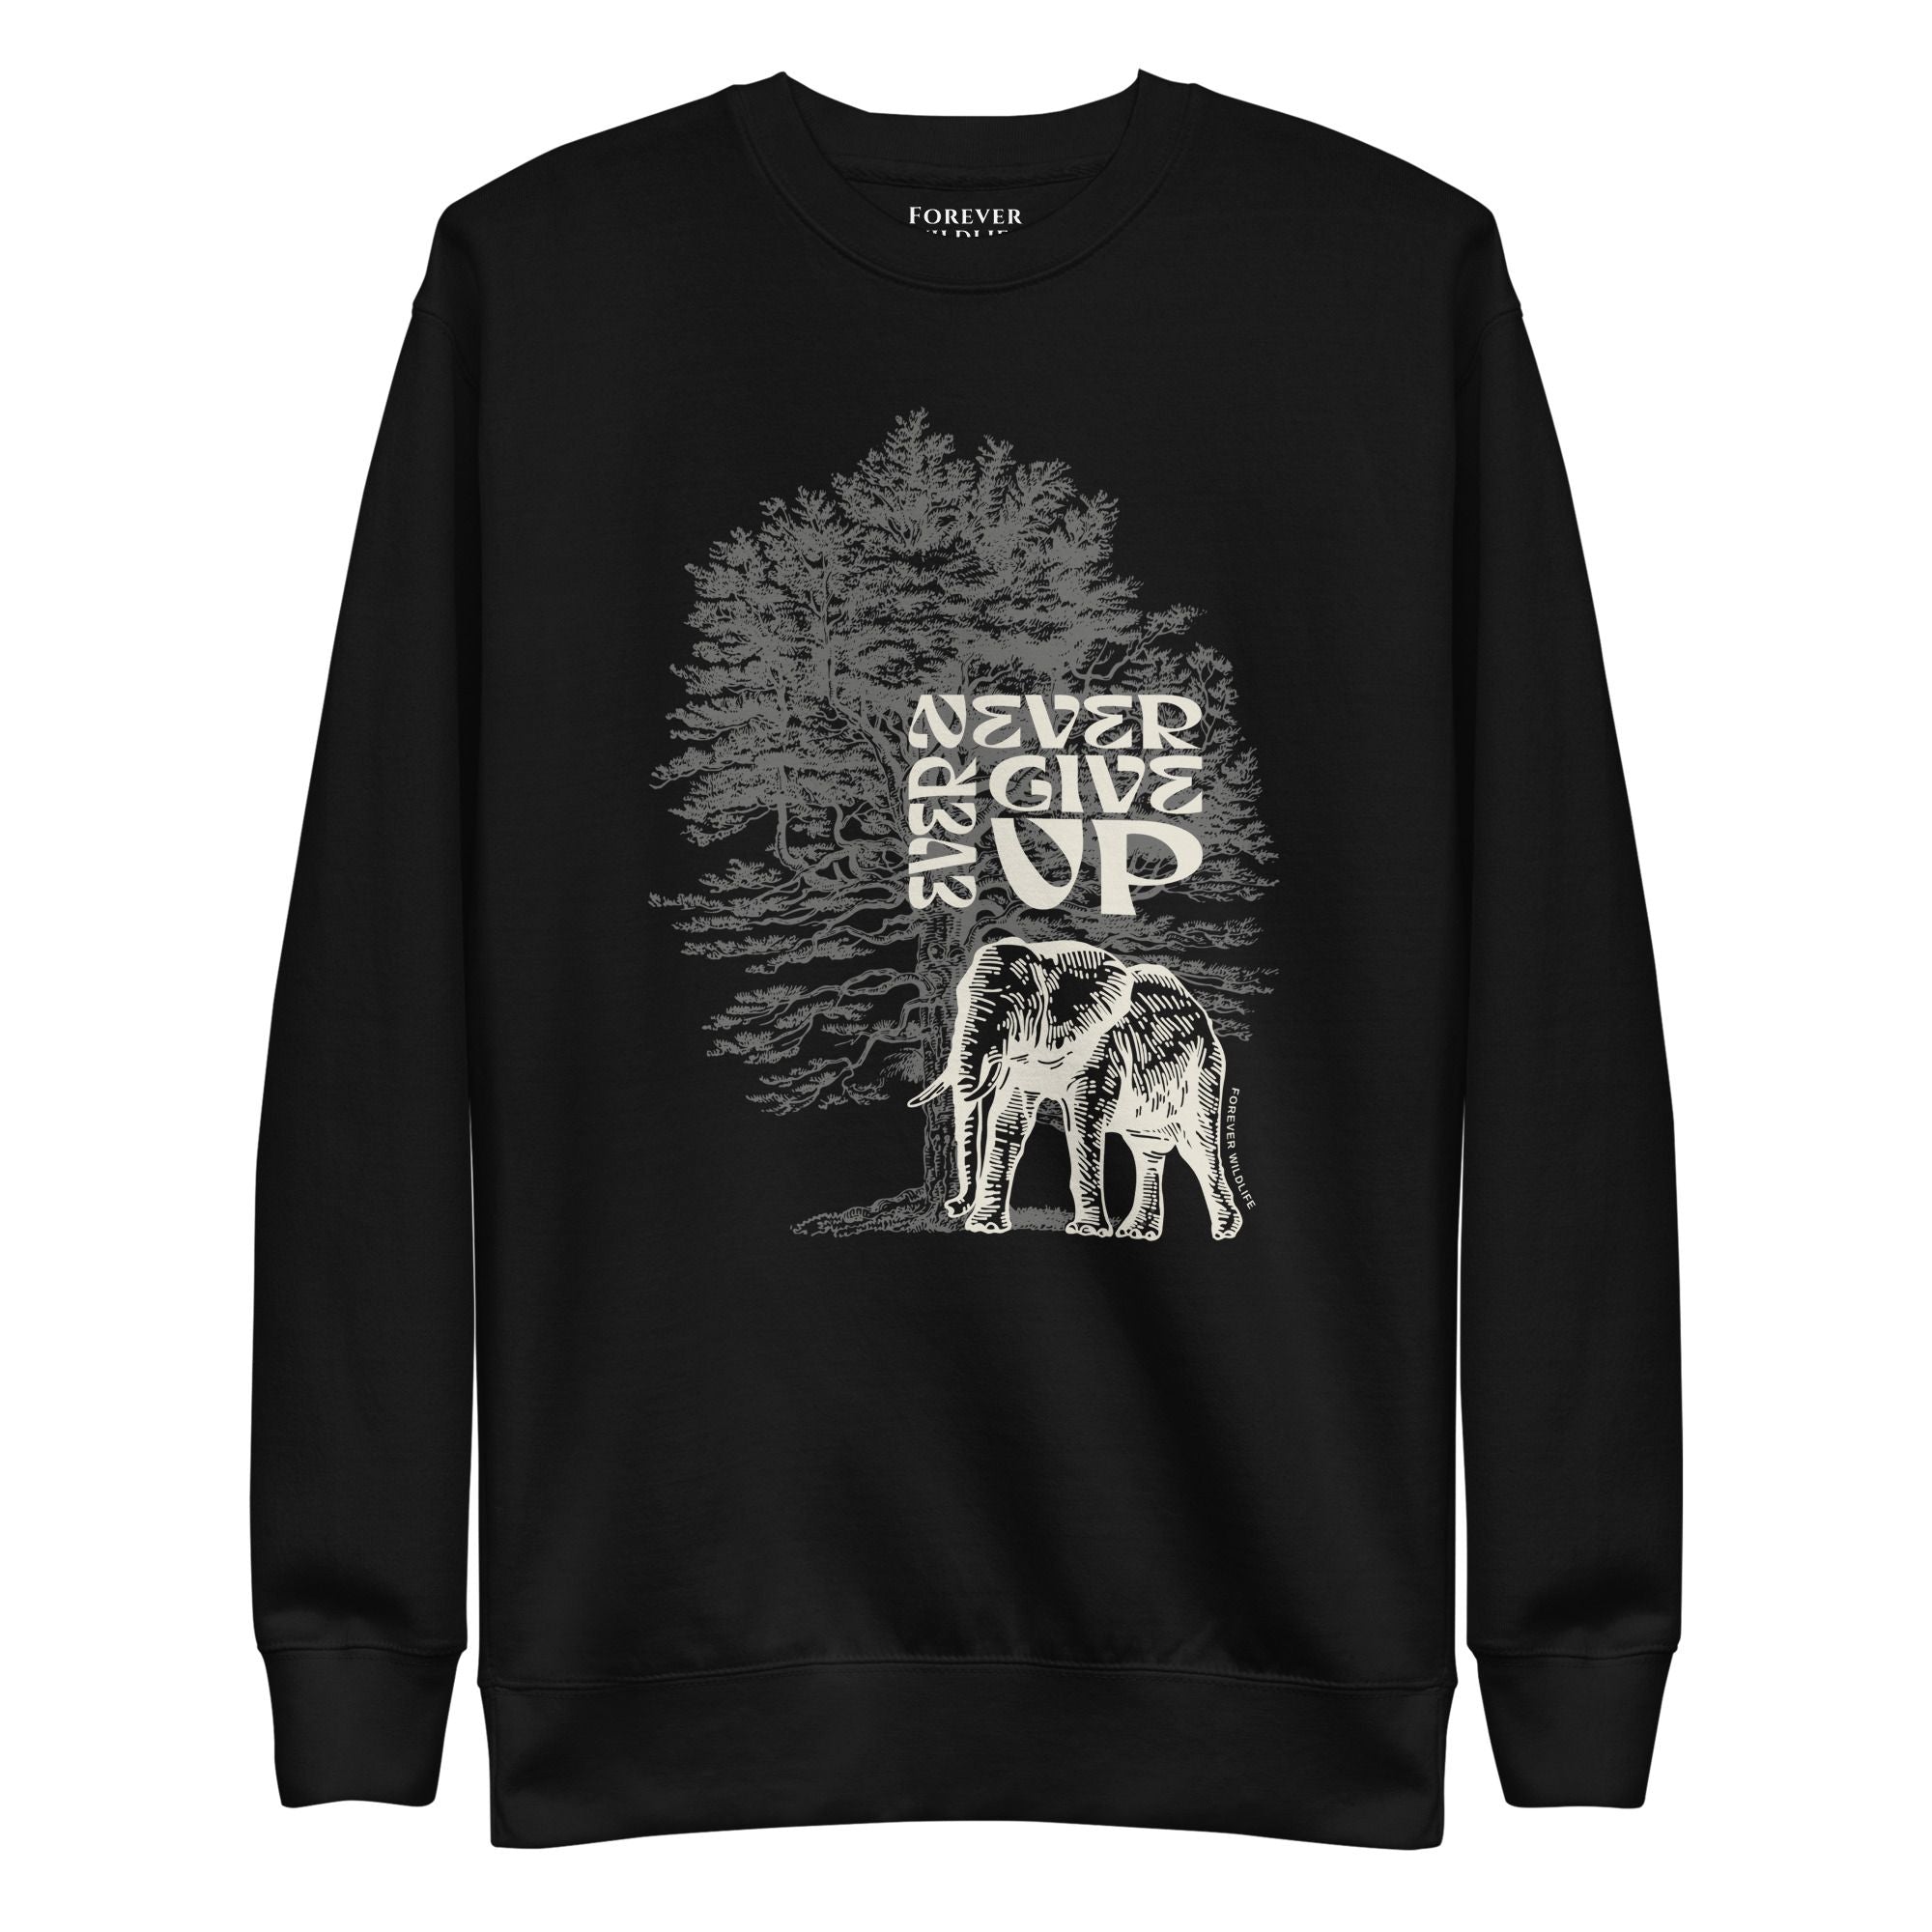 Elephant Sweatshirt in Black-Premium Wildlife Animal Inspiration Sweatshirt Design with 'Never Ever Give Up' text, part of Wildlife Sweatshirts & Clothing from Forever Wildlife.